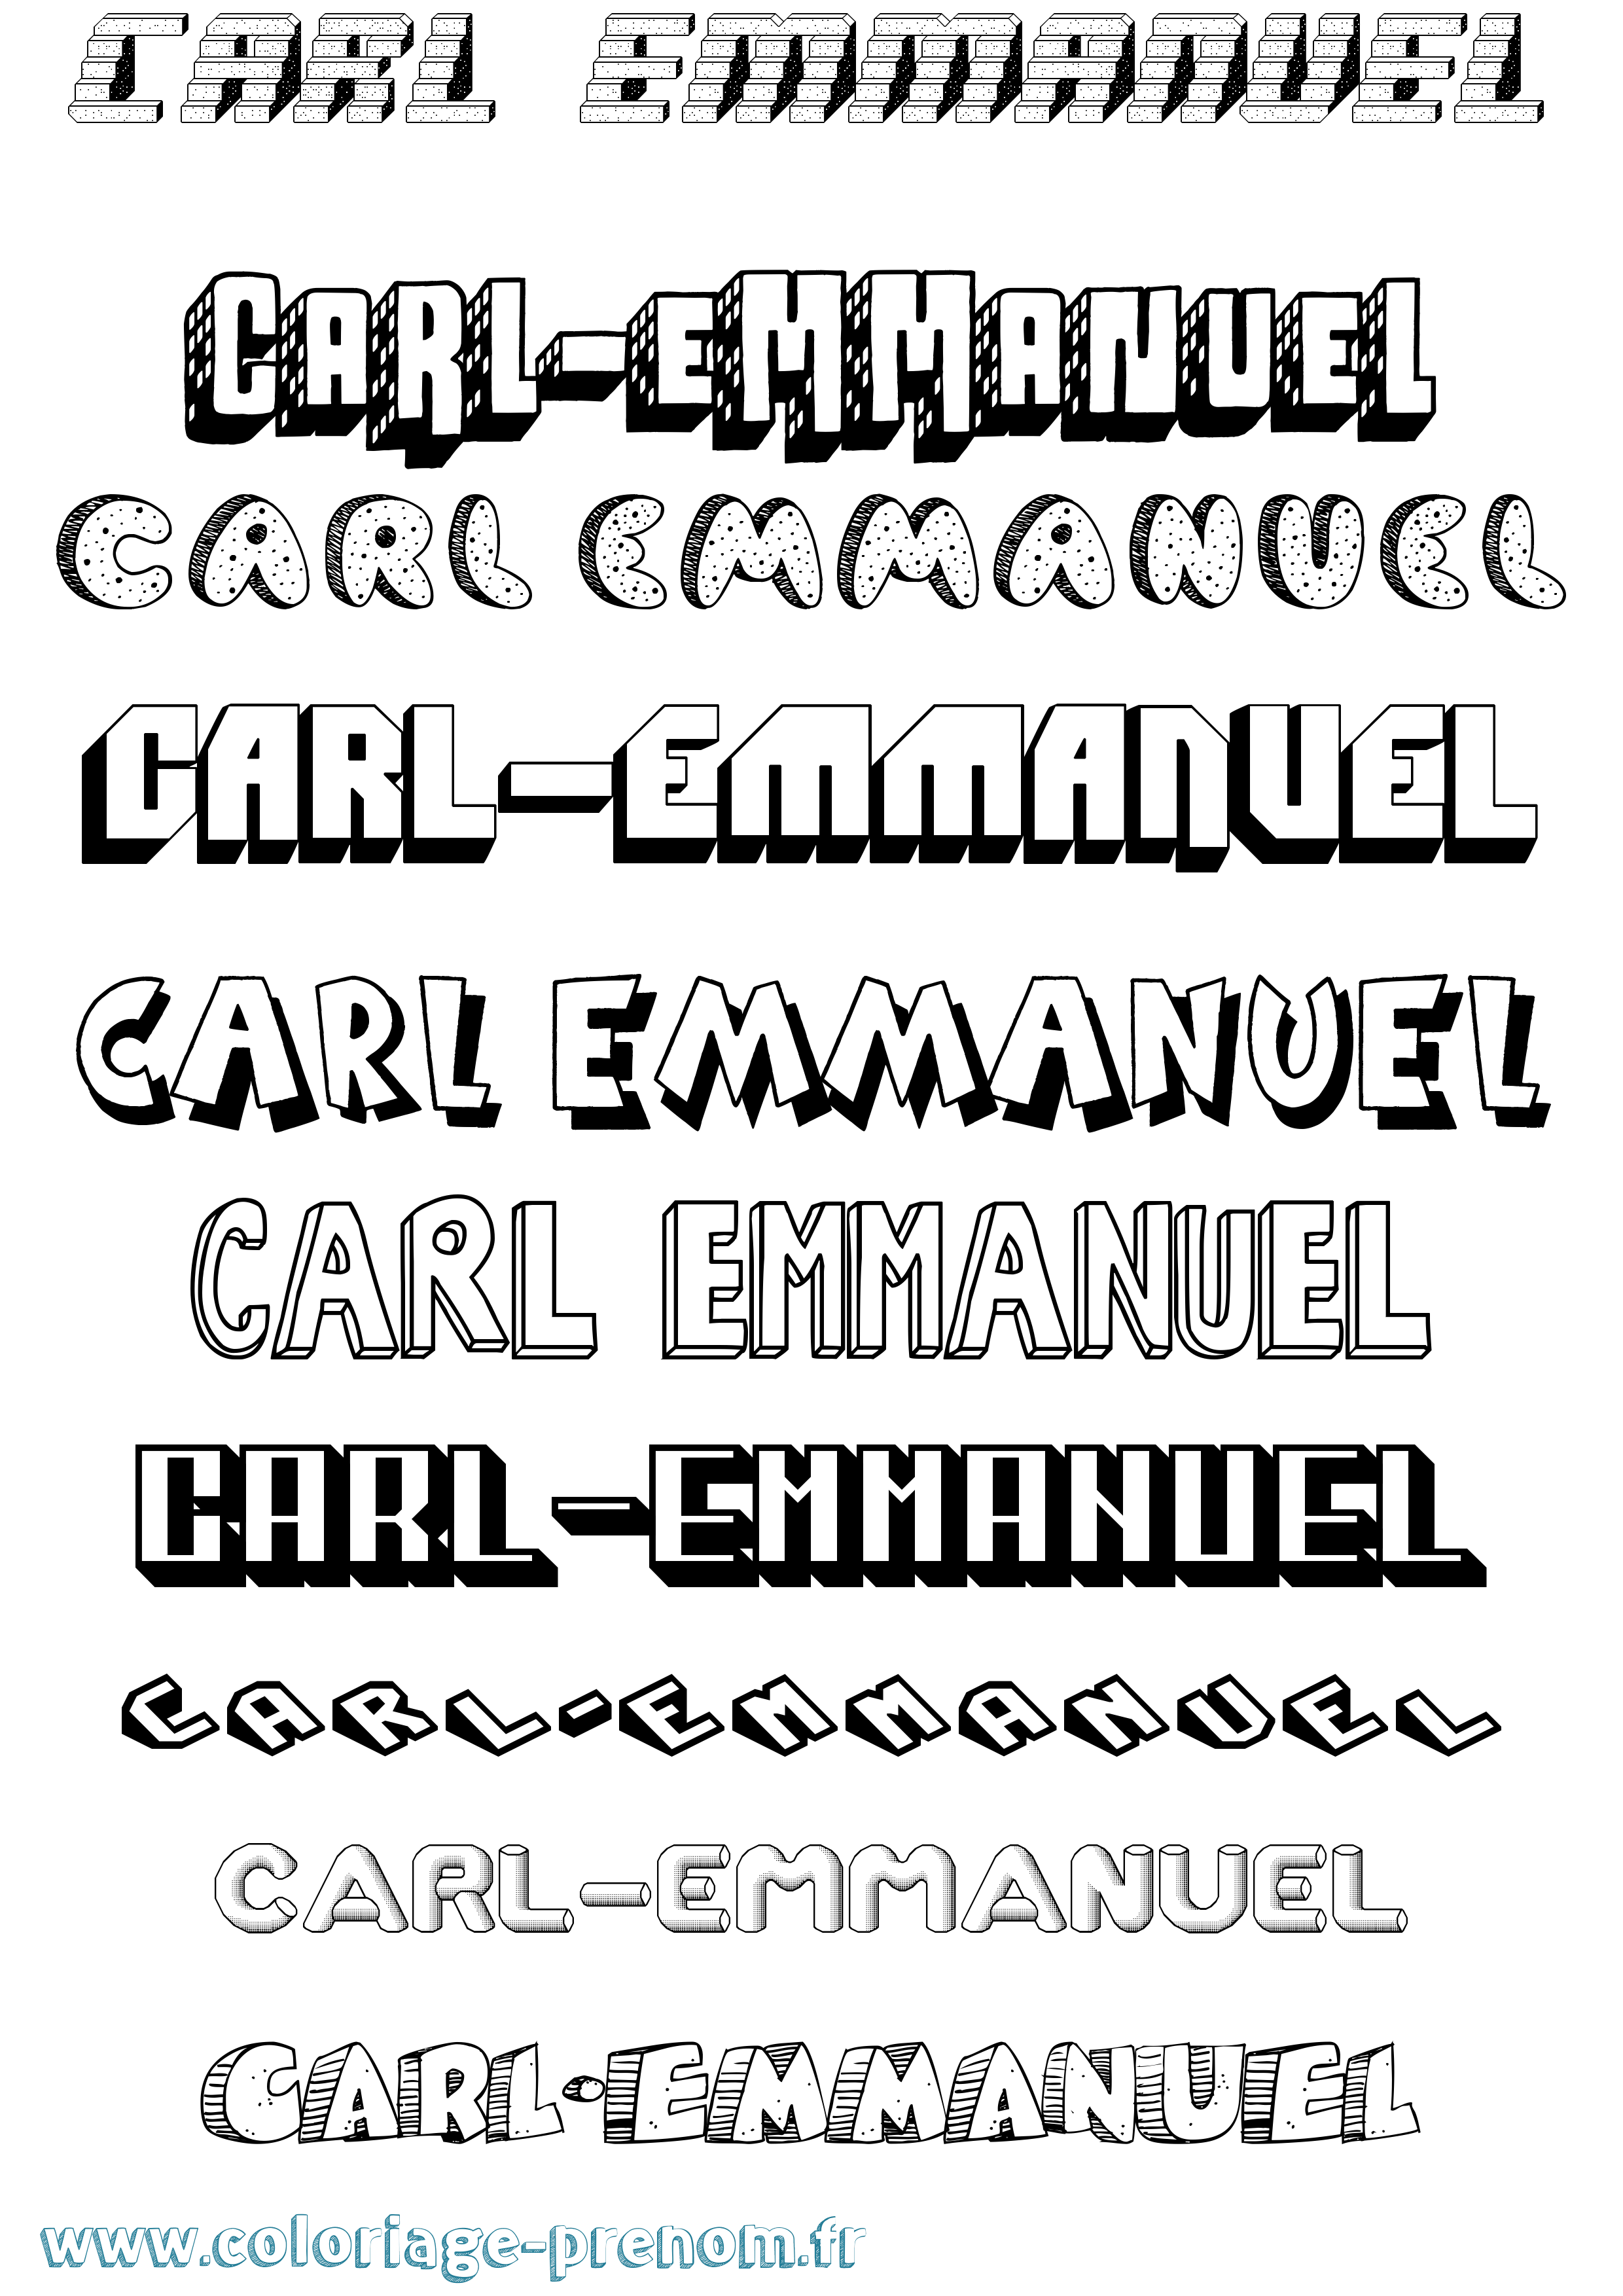 Coloriage prénom Carl-Emmanuel Effet 3D